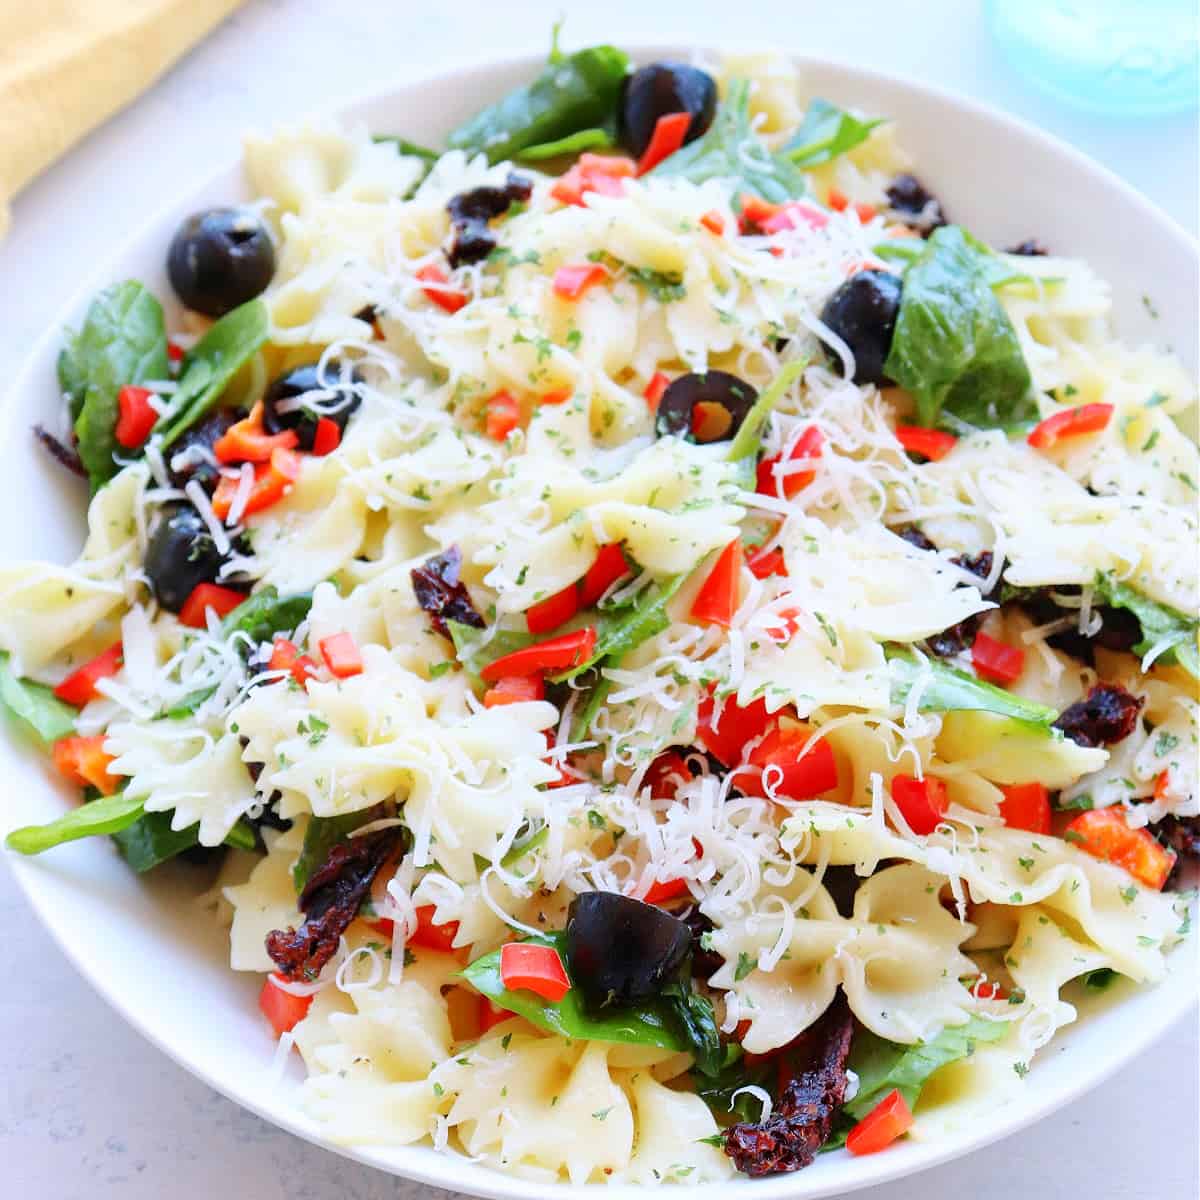 Tuscan pasta salad in a bowl.